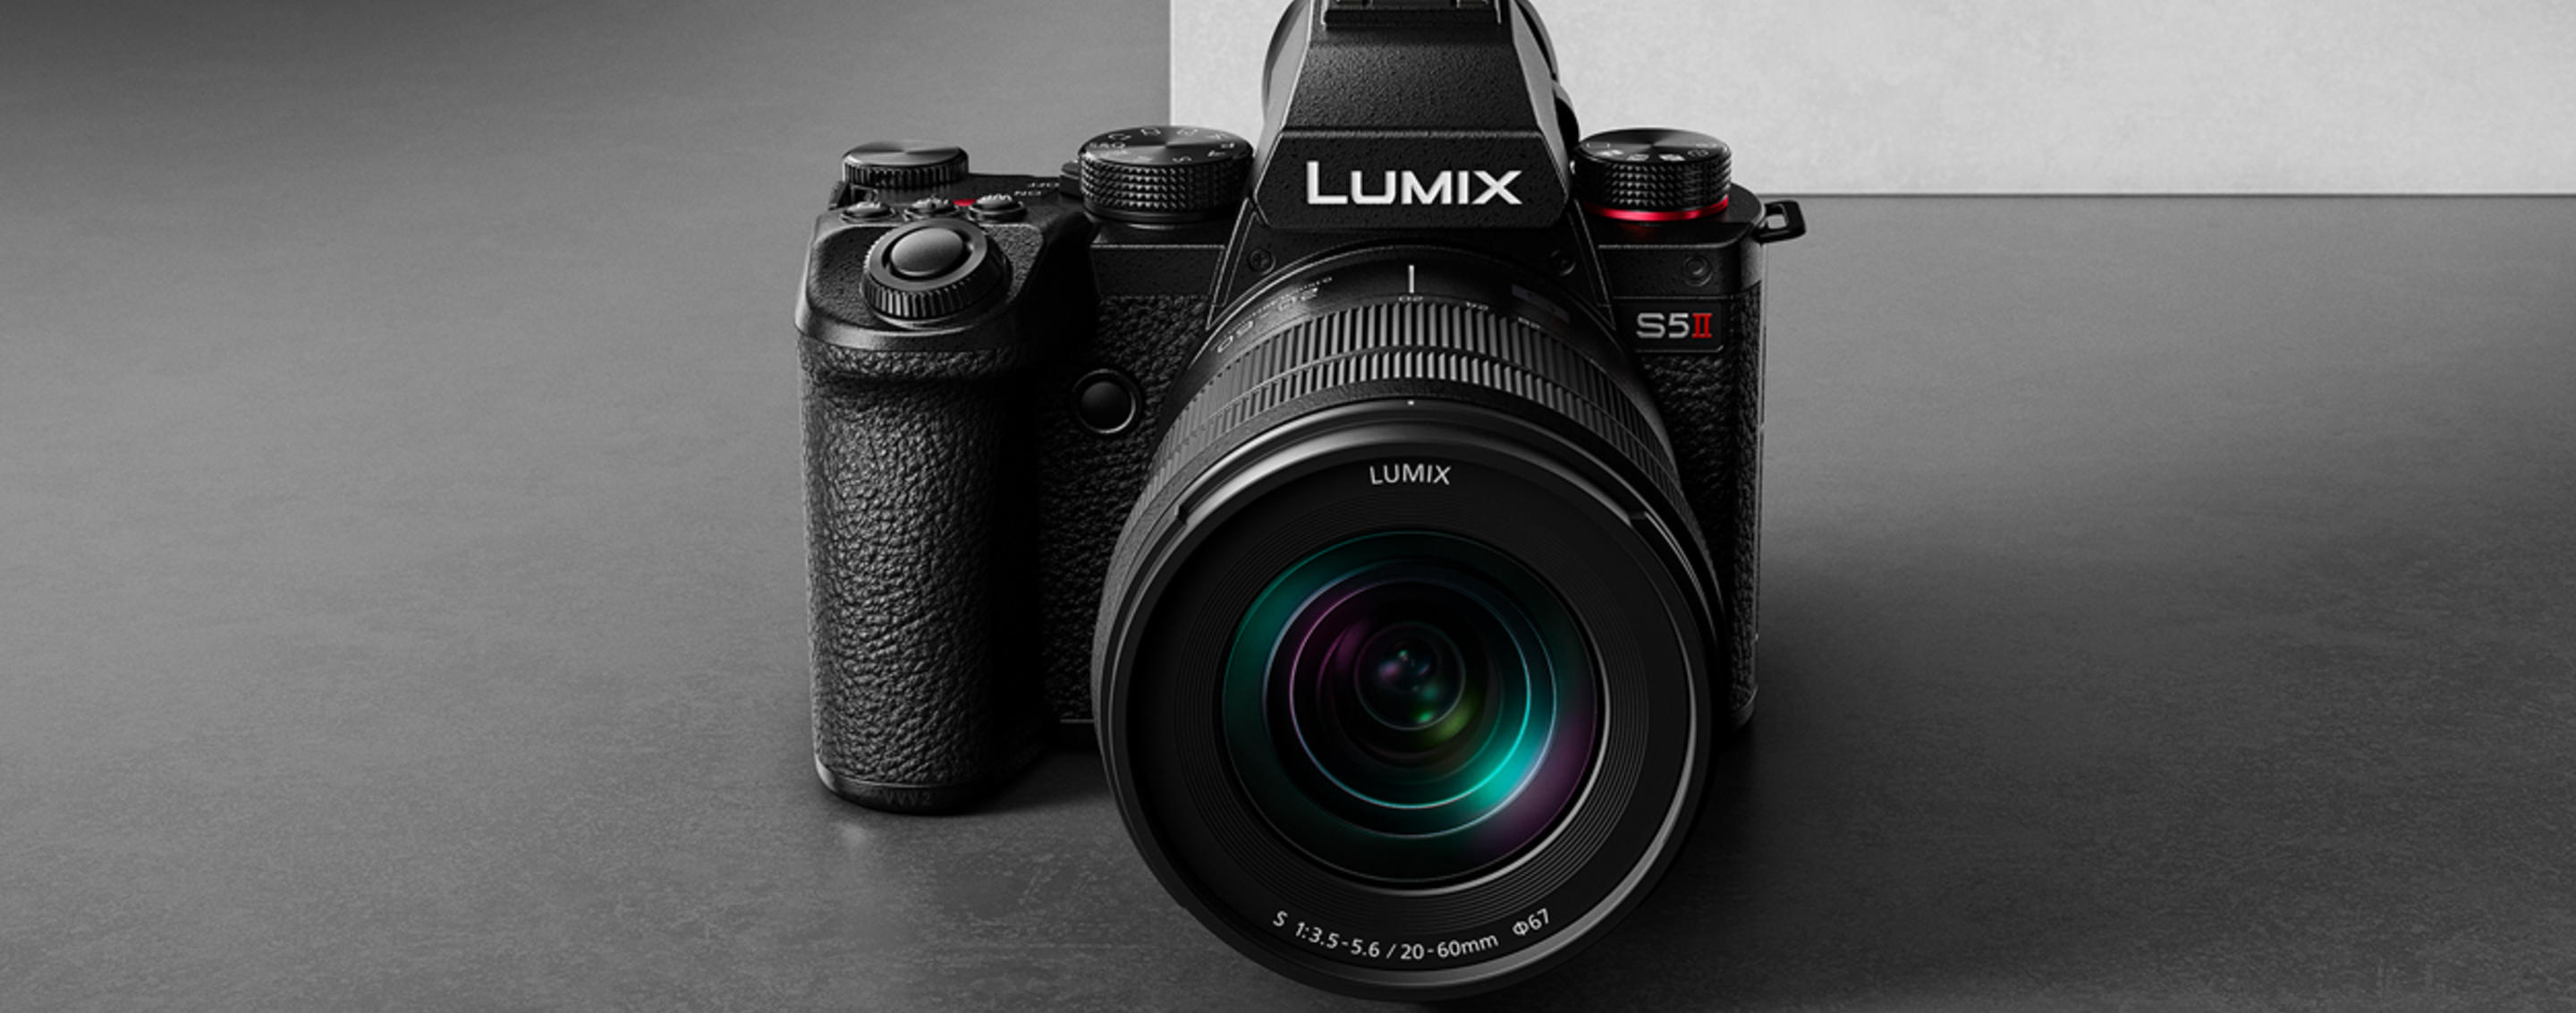 LUMIX S5II camera